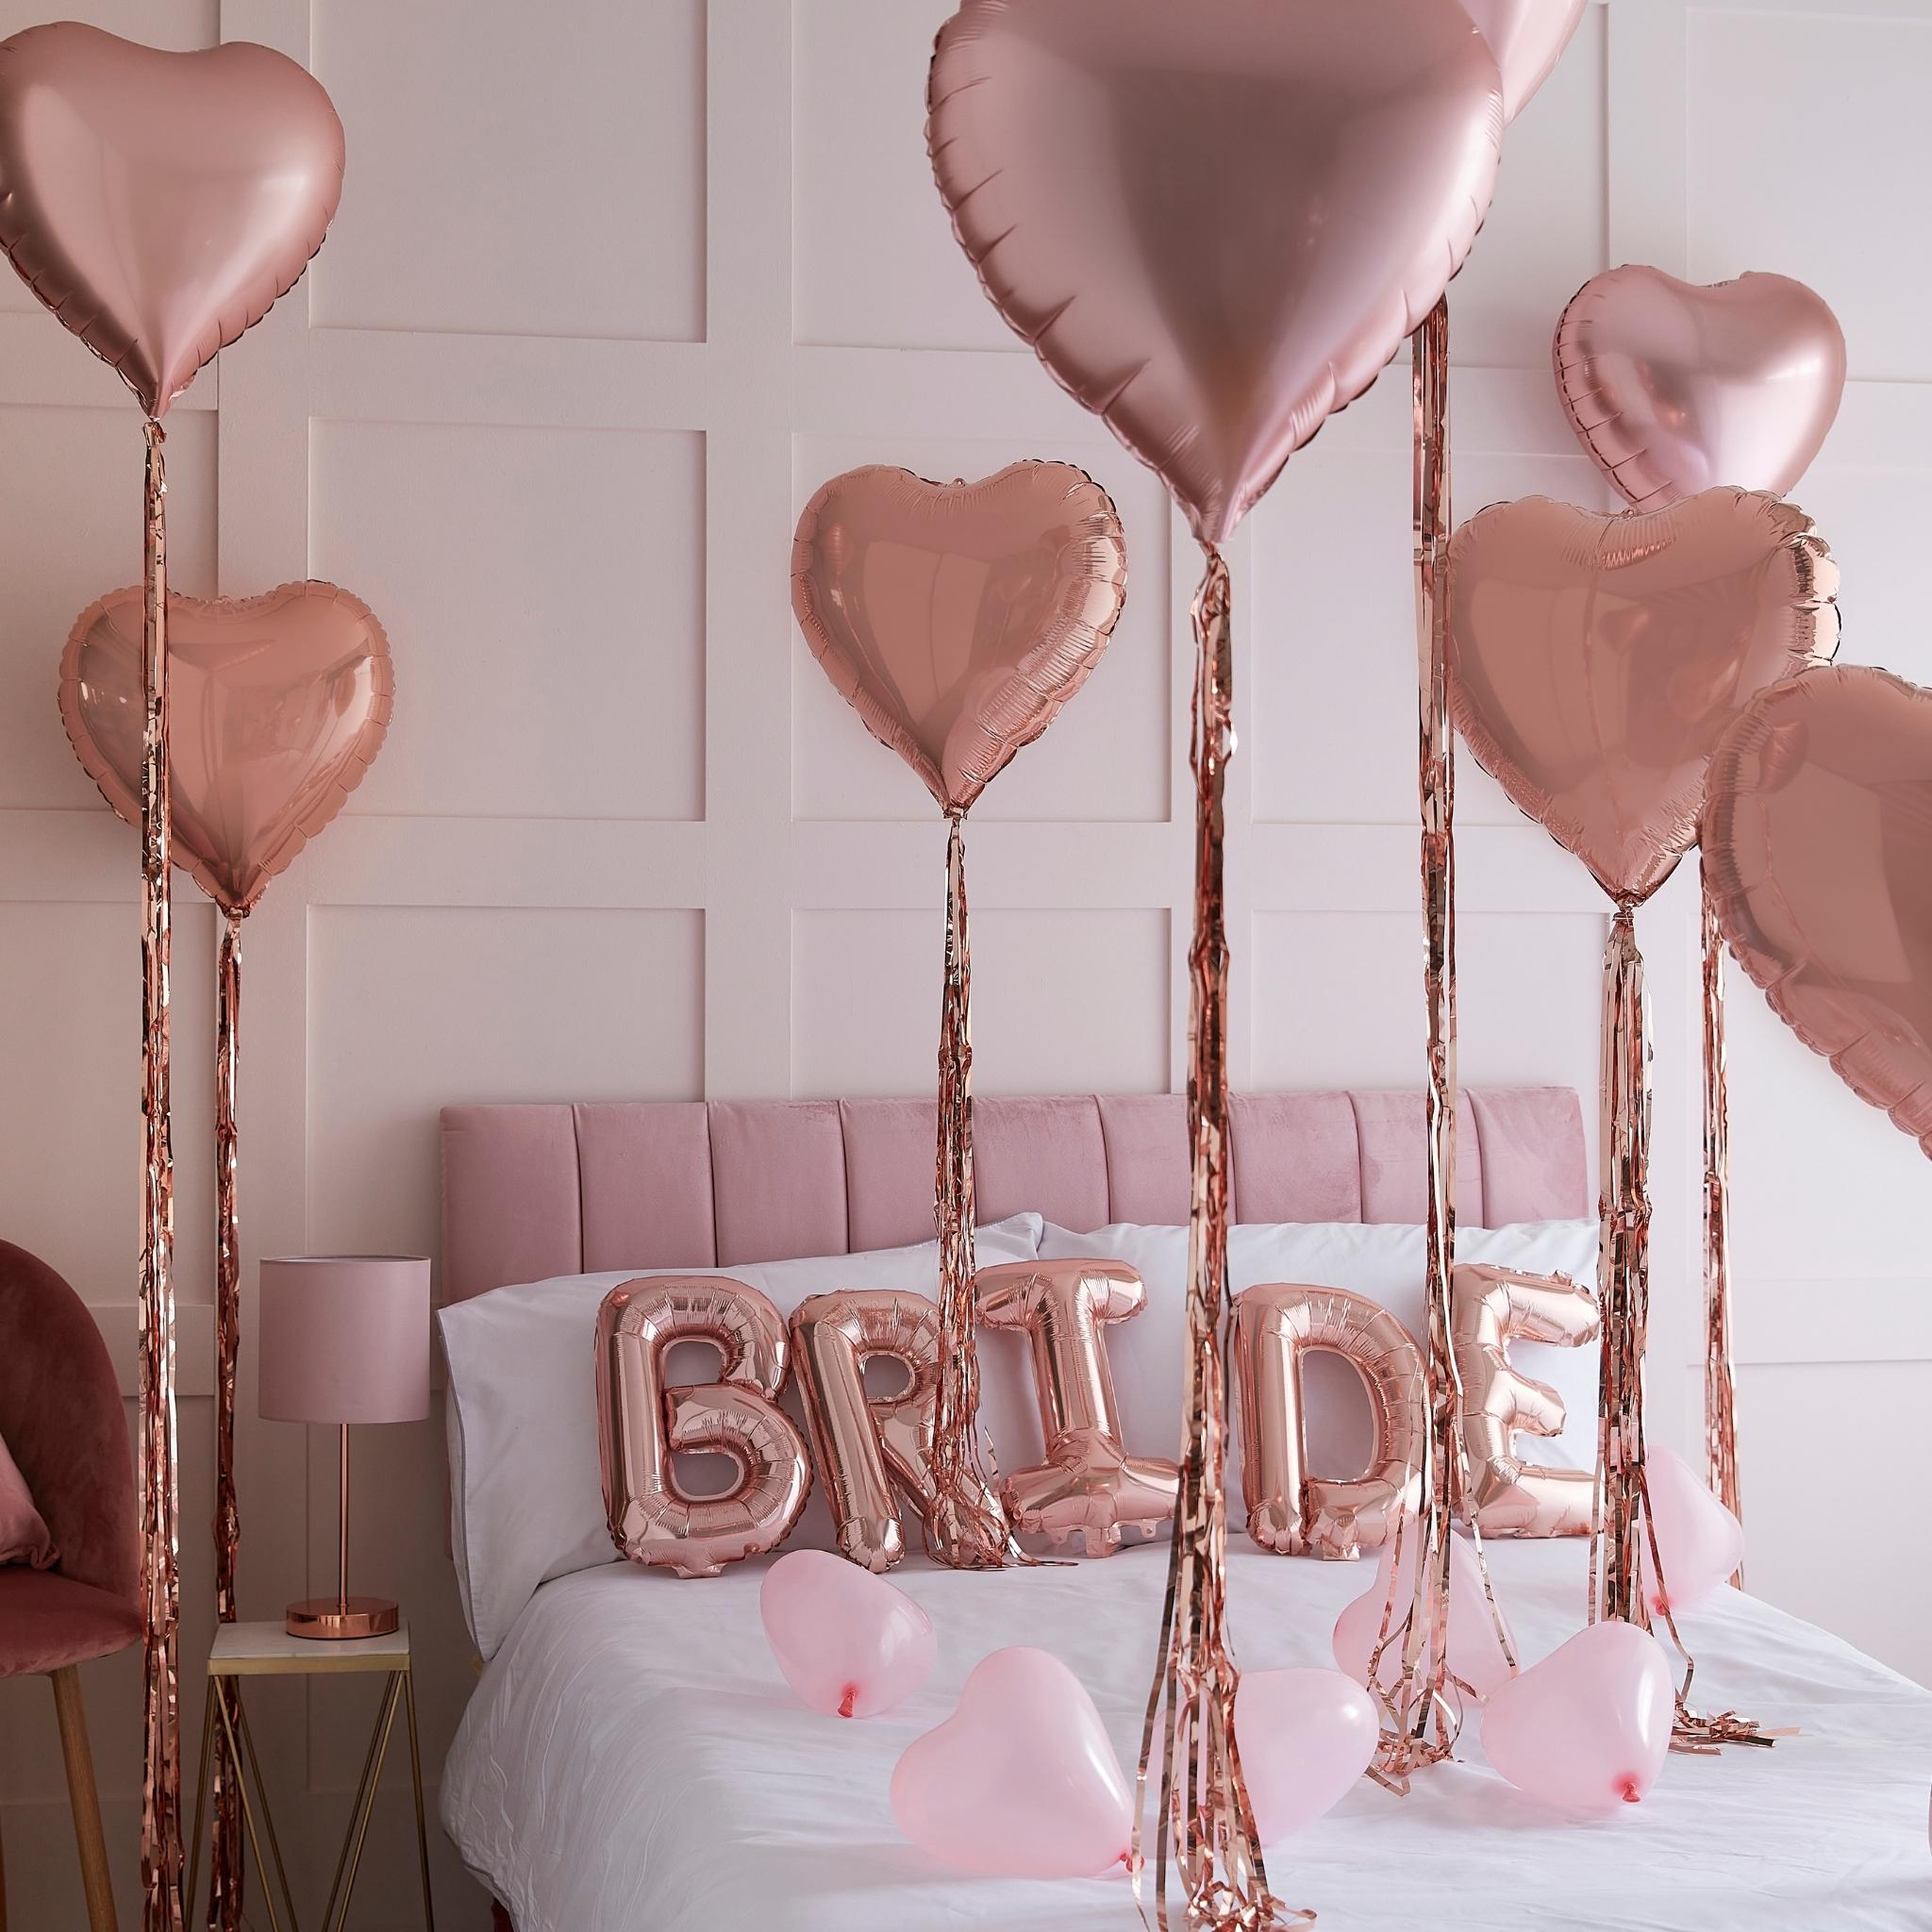 Bride Bedroom Decor Balloon Pack – Prickly pear me